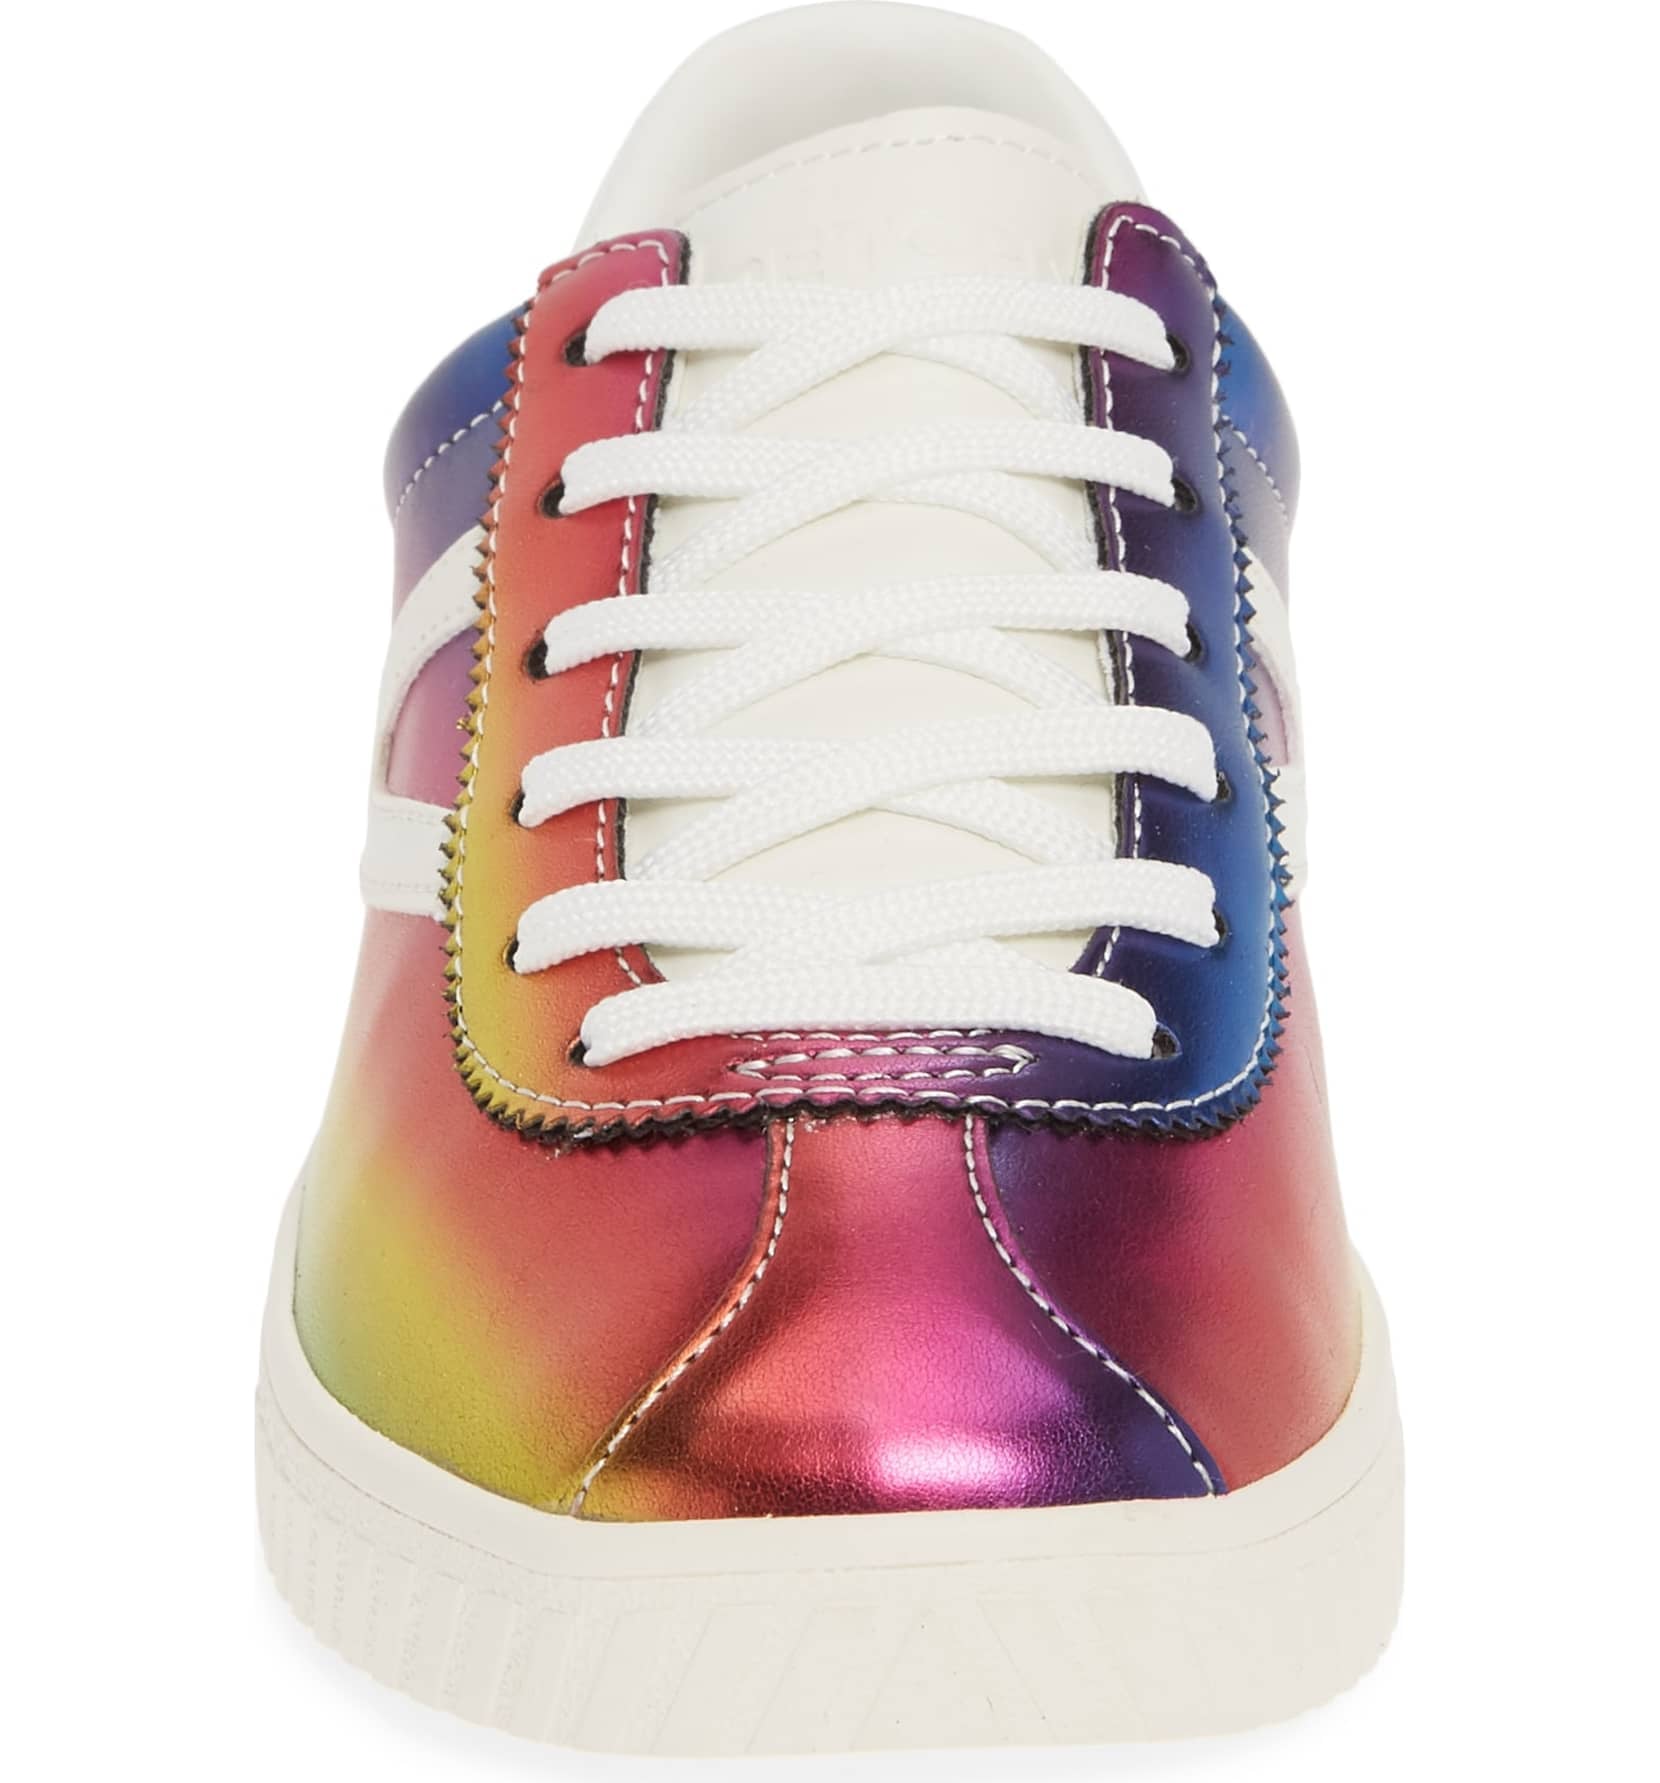 rainbow tretorn shoes